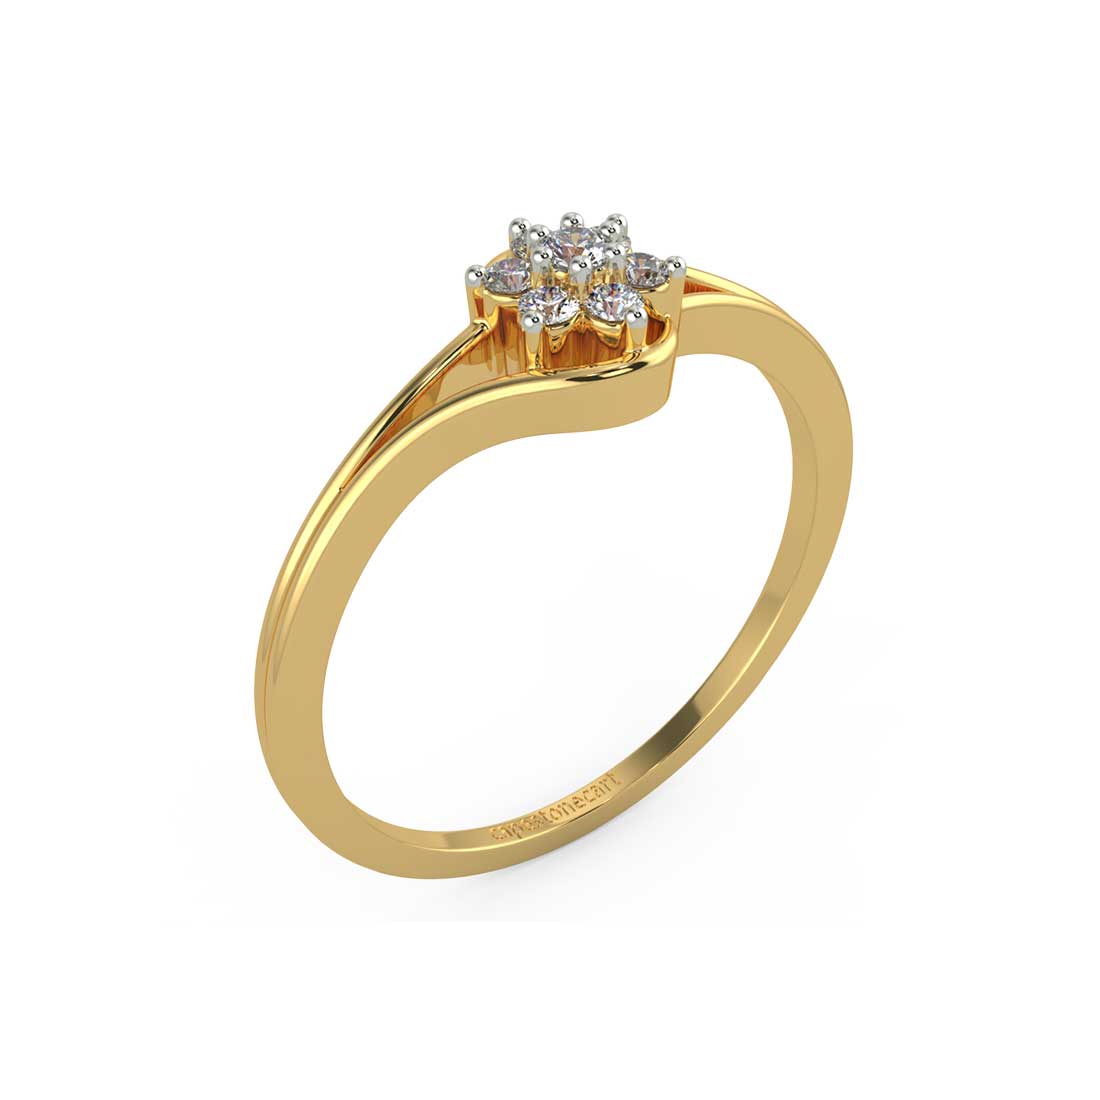 Iridescent 18 Karat Gold And Diamond Ring For Men